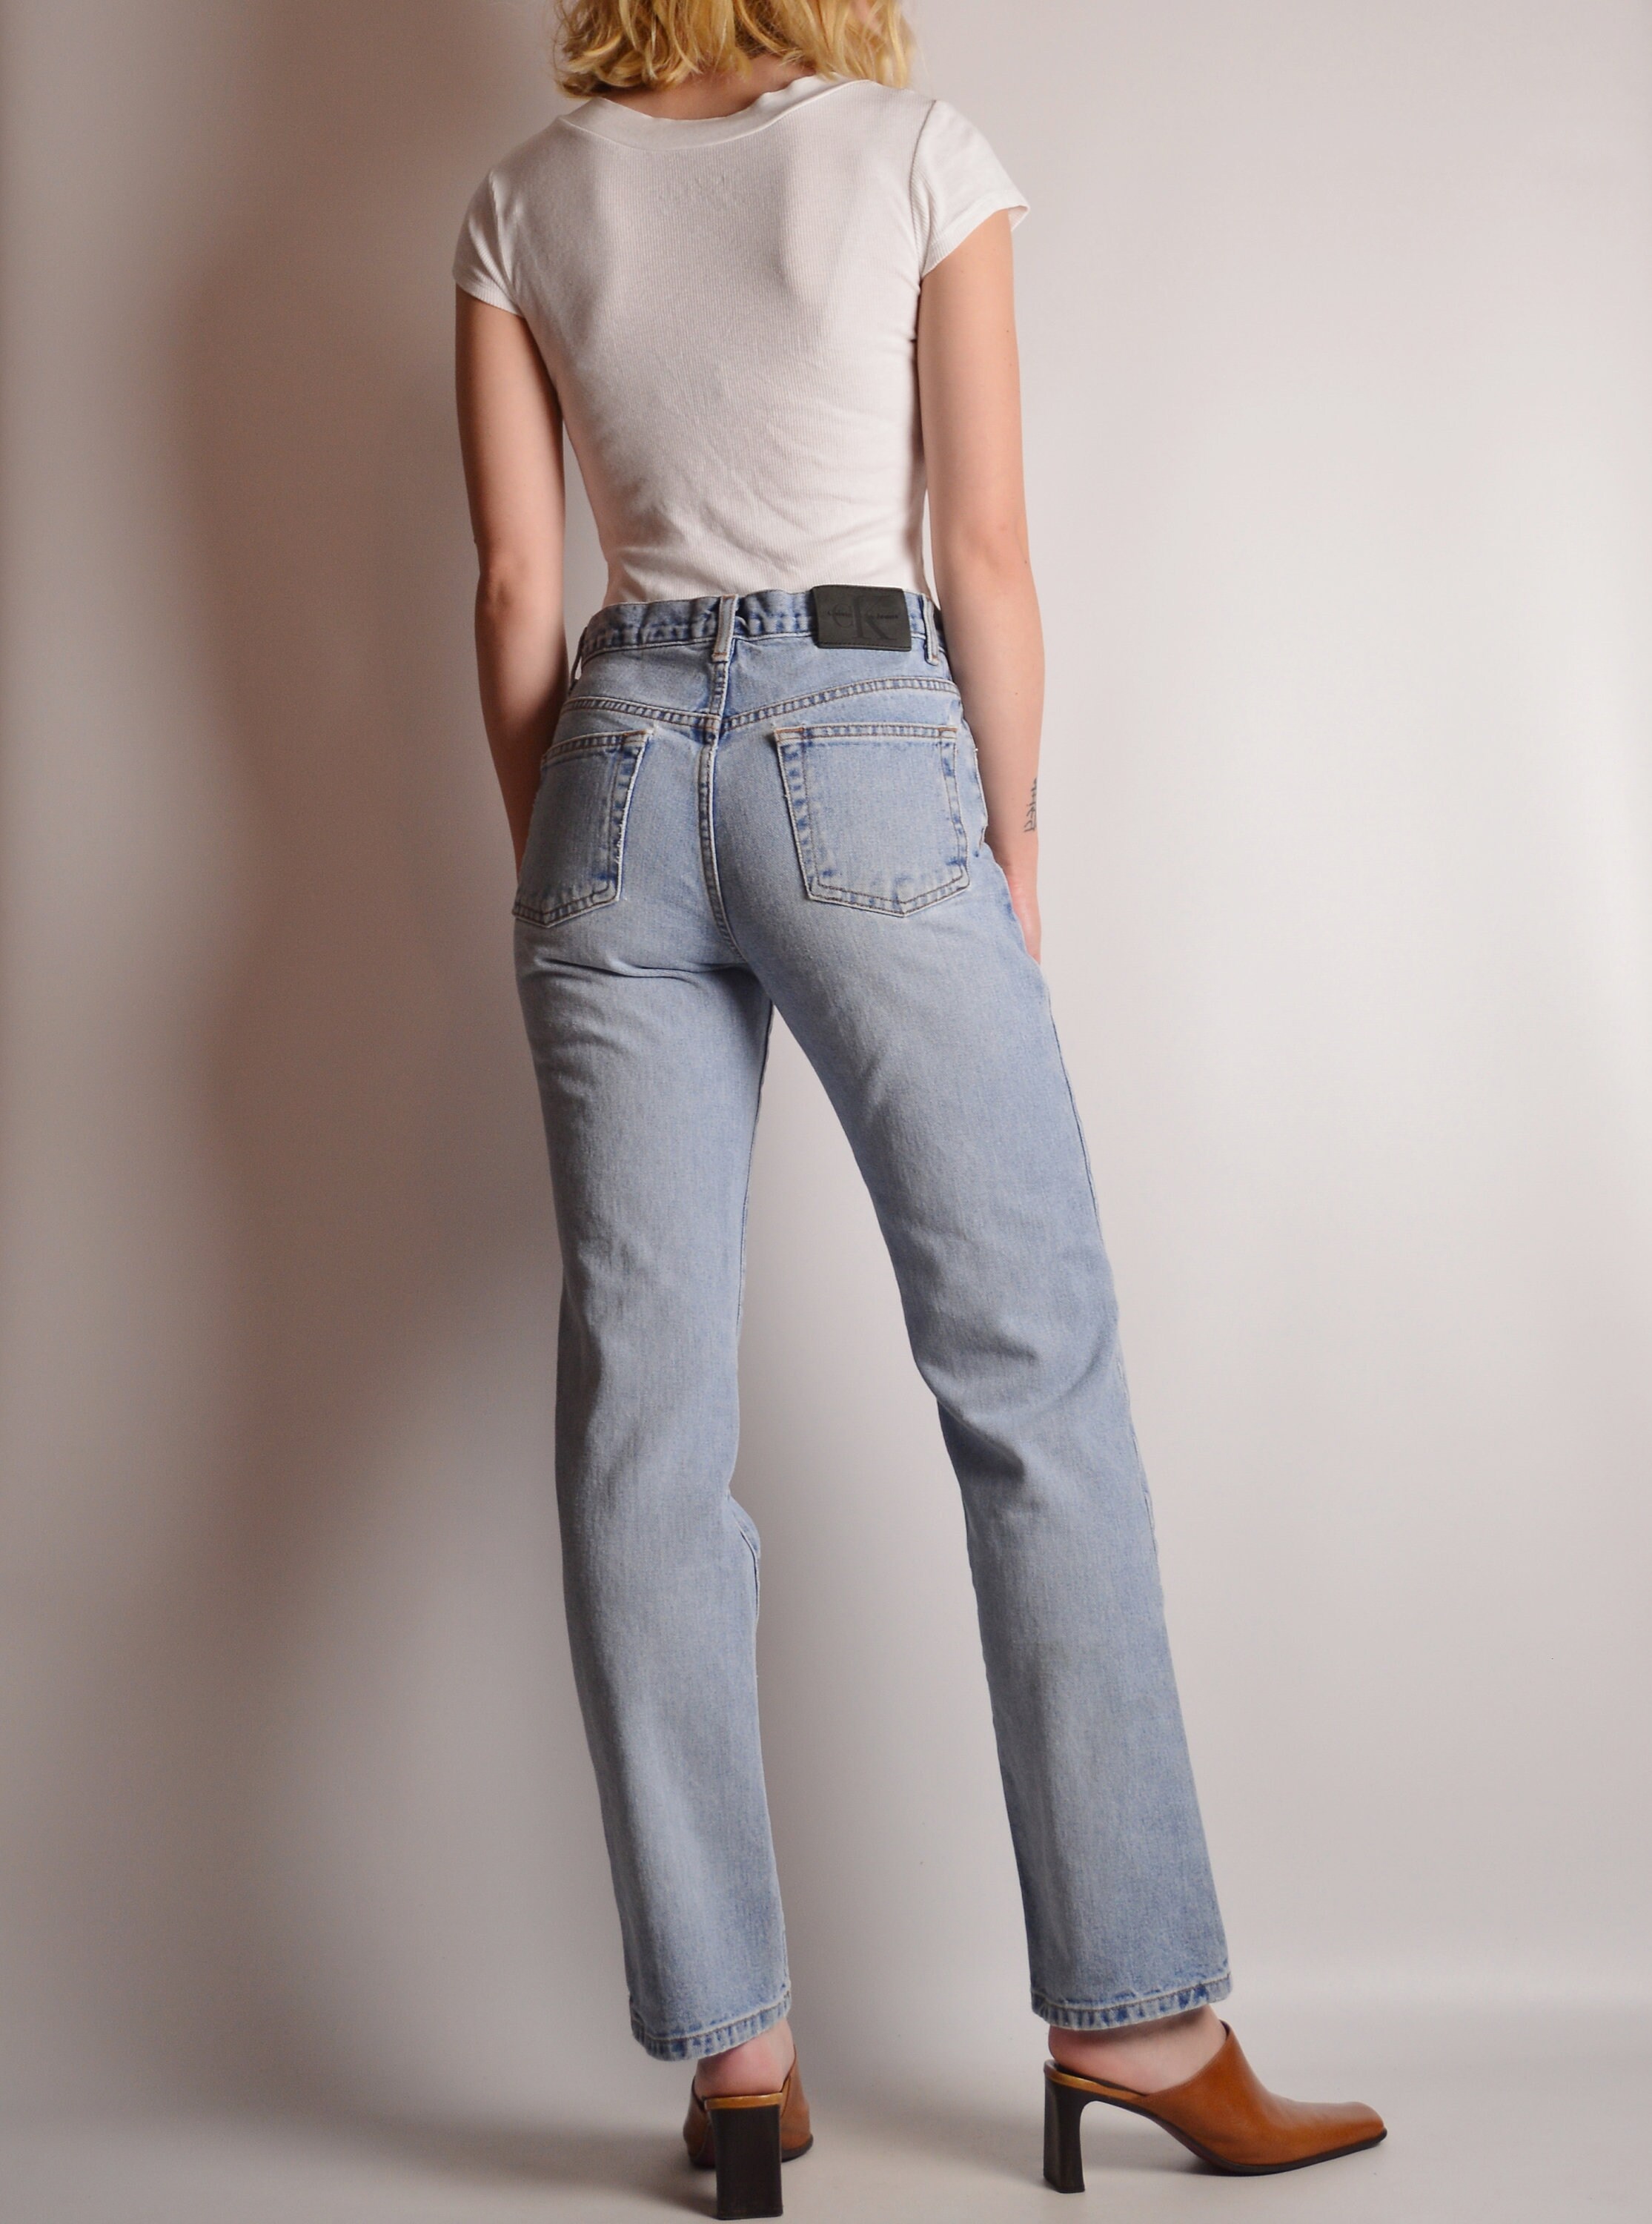 Vintage Calvin Klein Slim Fit Jeans (Sz 2)